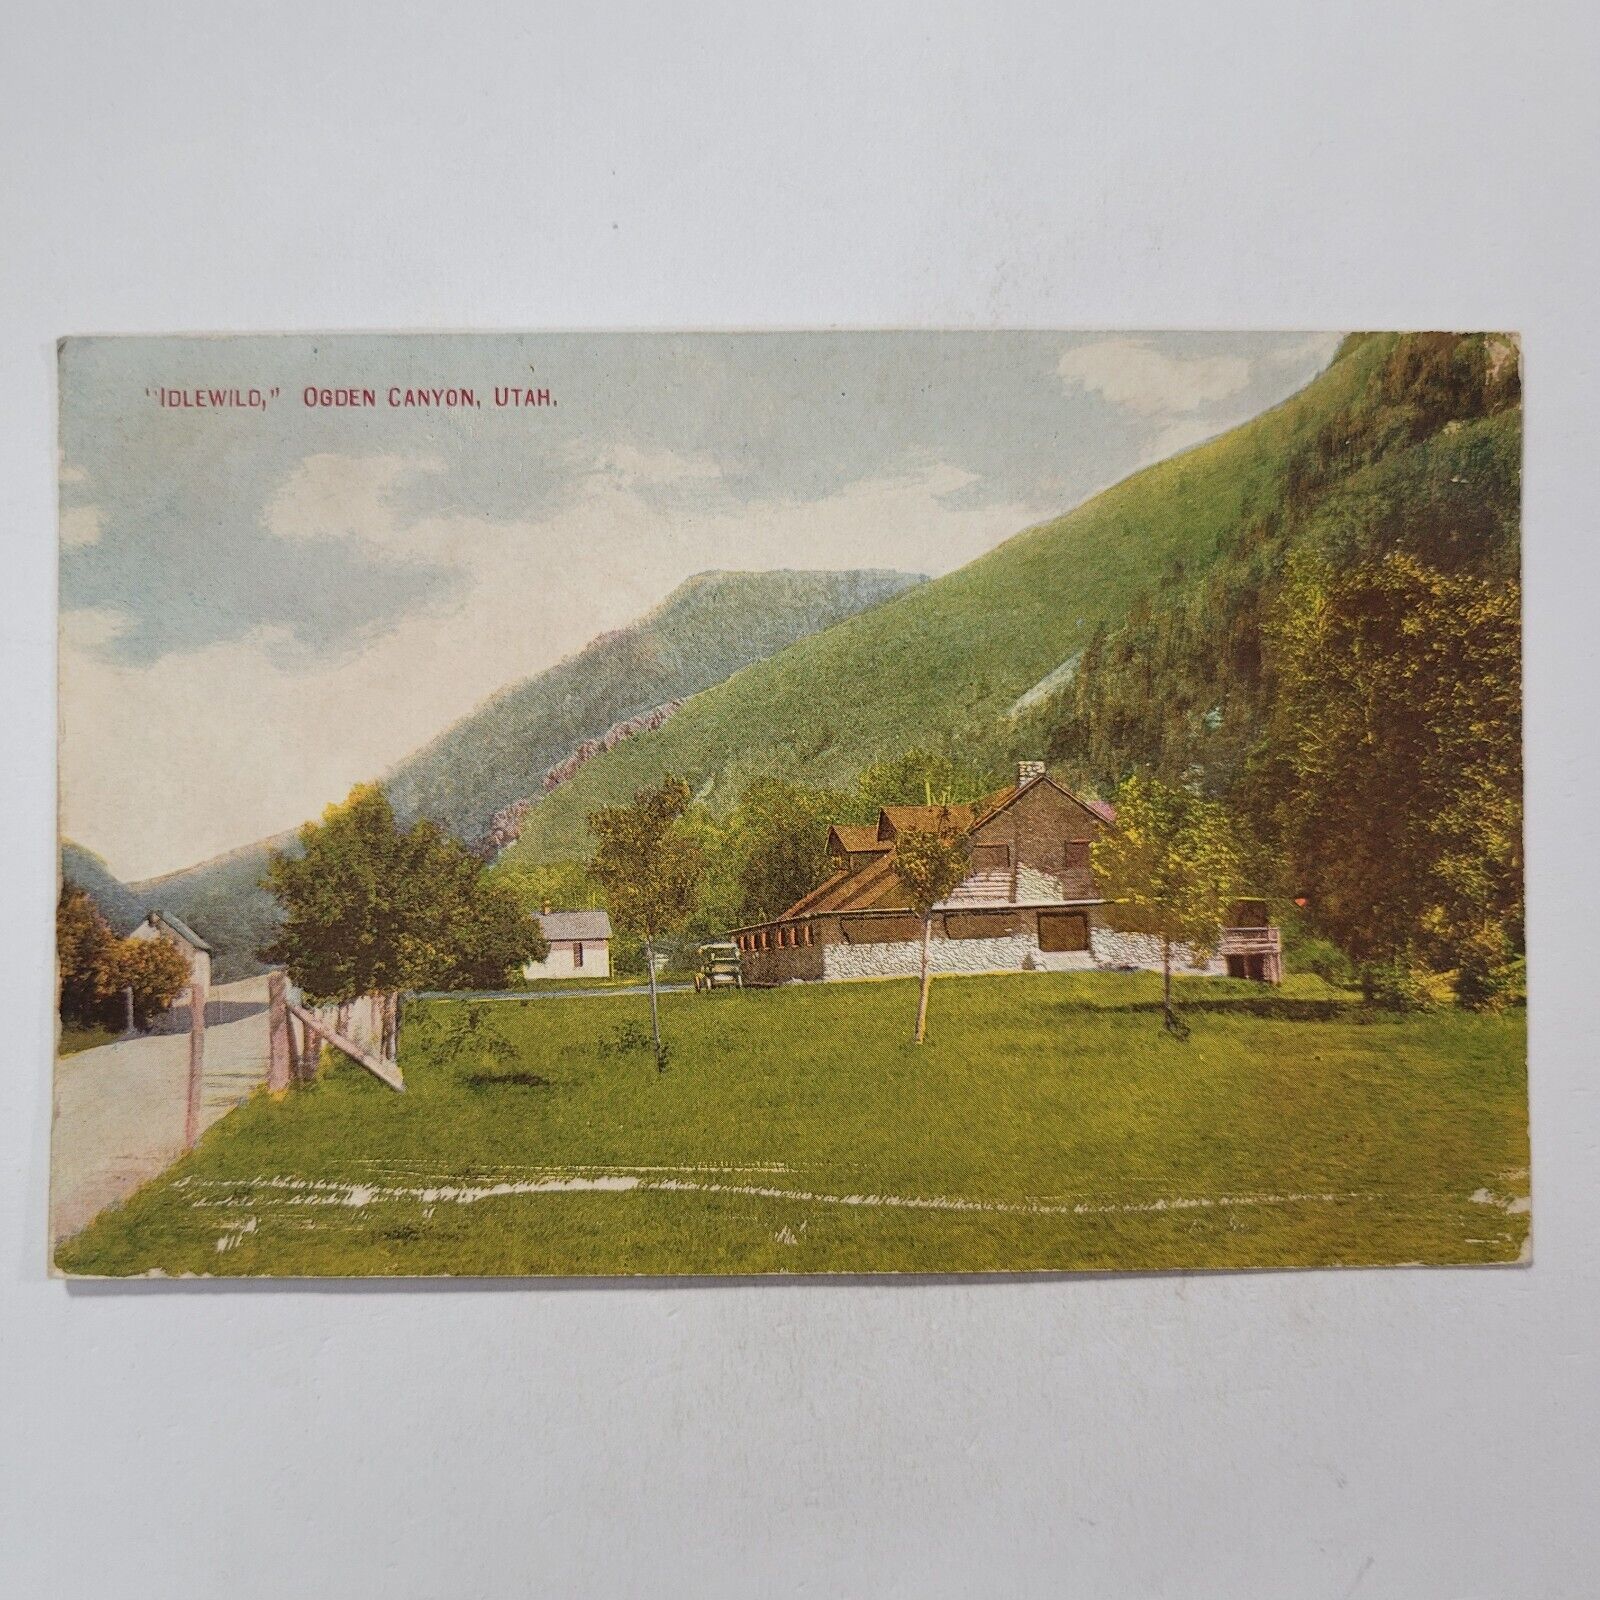 Idlewild Lodge Resort Inn Ogden Canyon Utah Antique Vintage Postcard c1900s